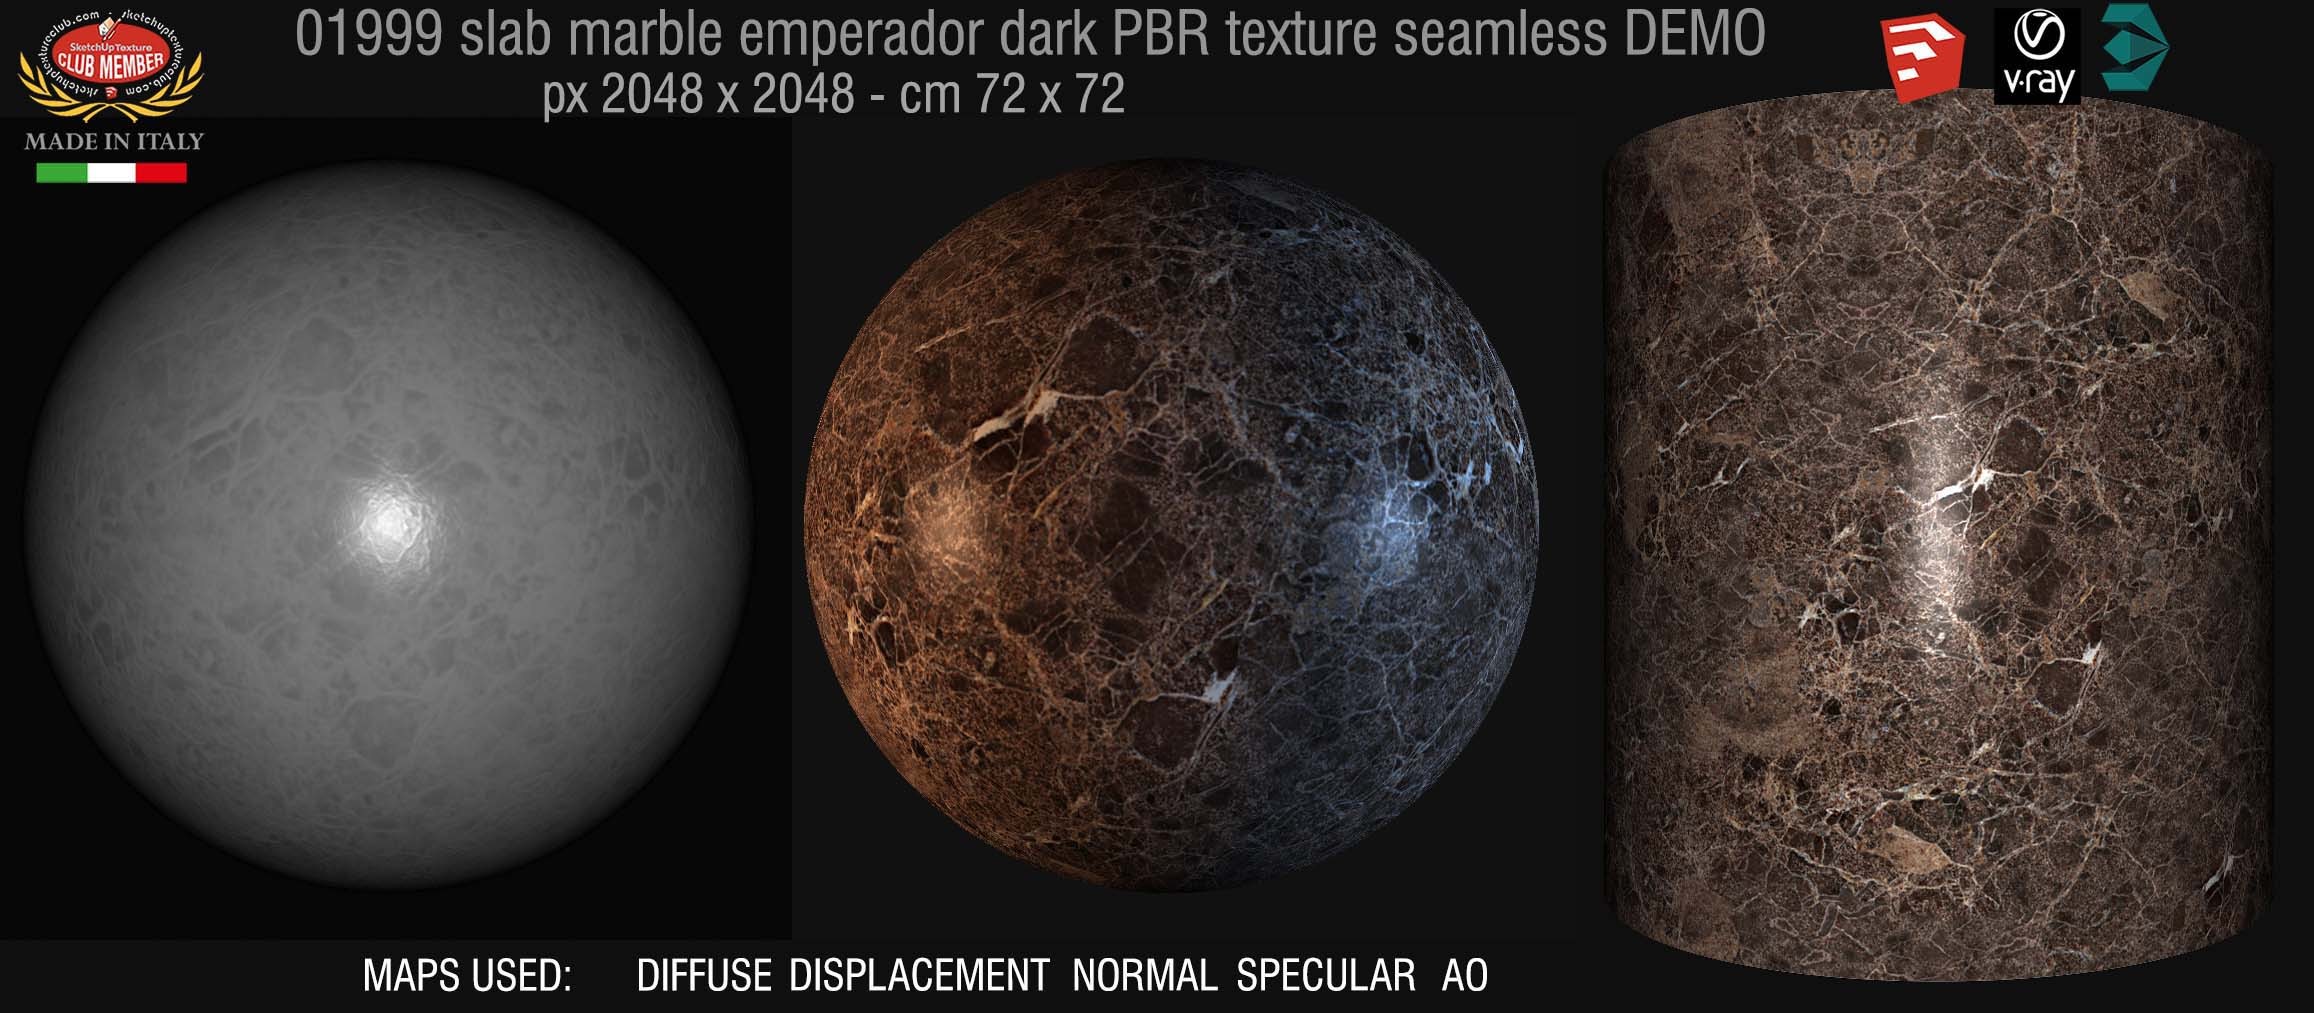 01999 slab marble emperador dark PBR texture seamless DEMO